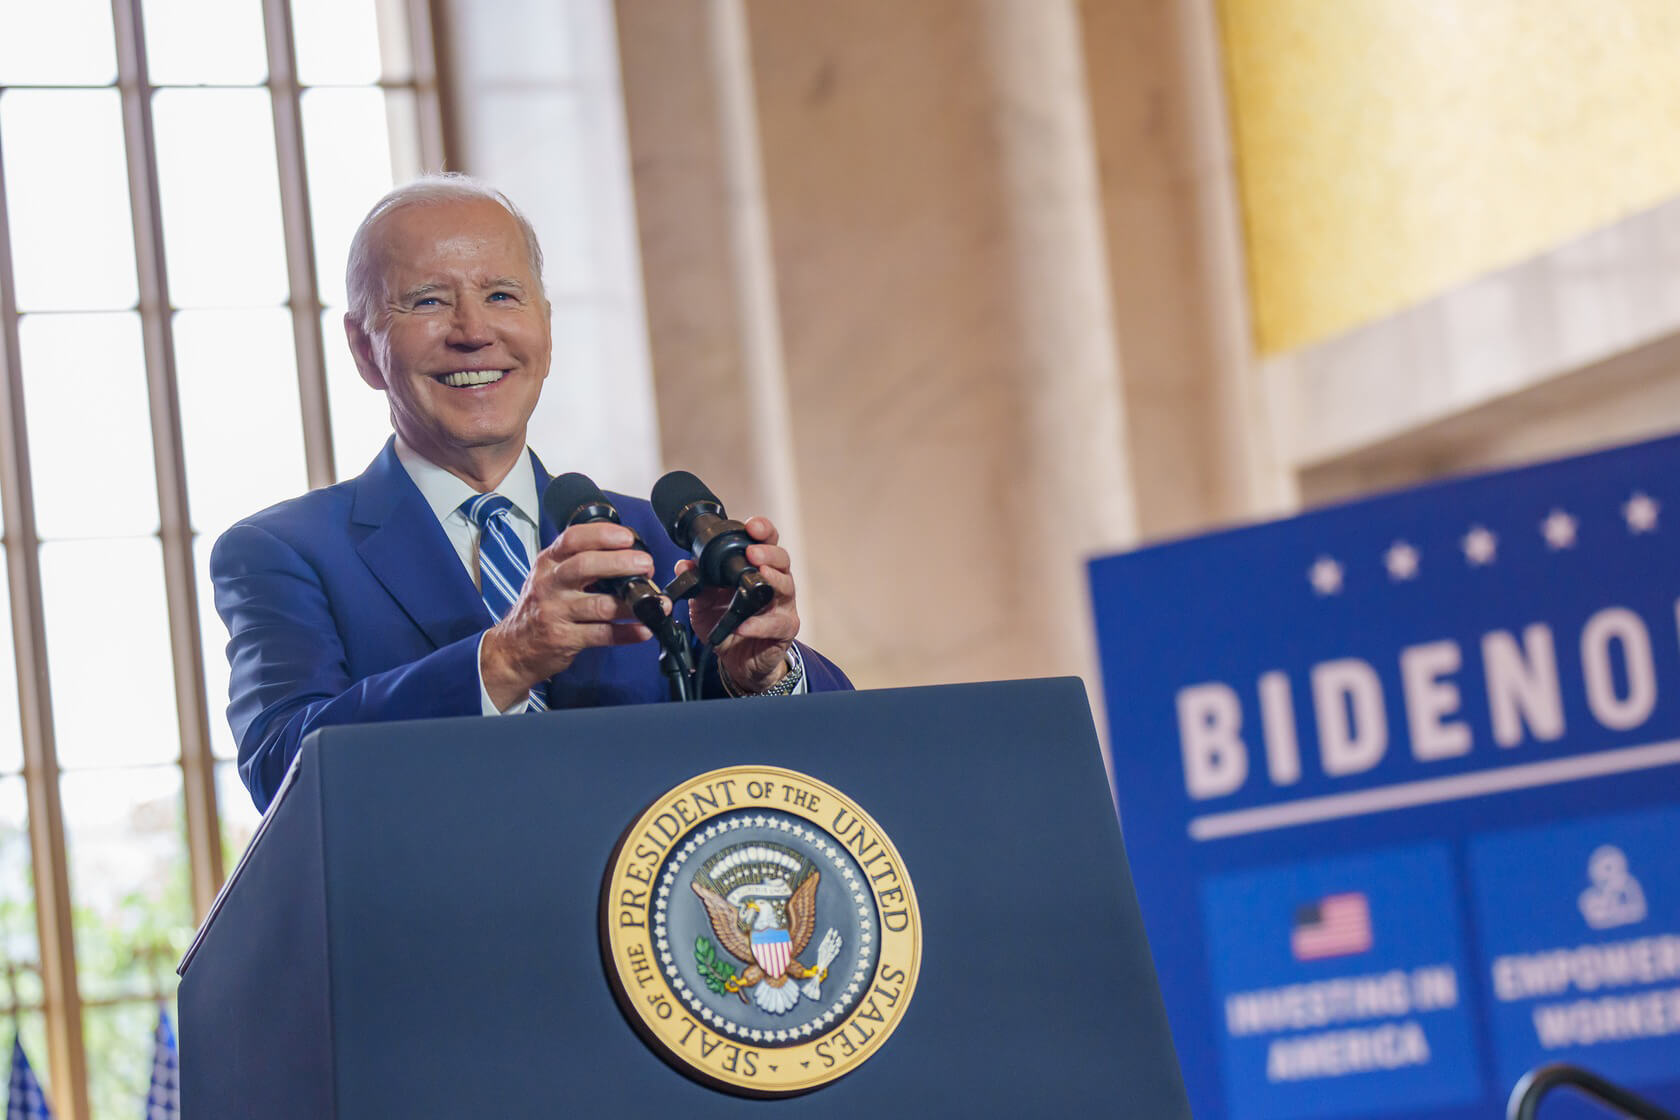 Image of president Biden behind podium